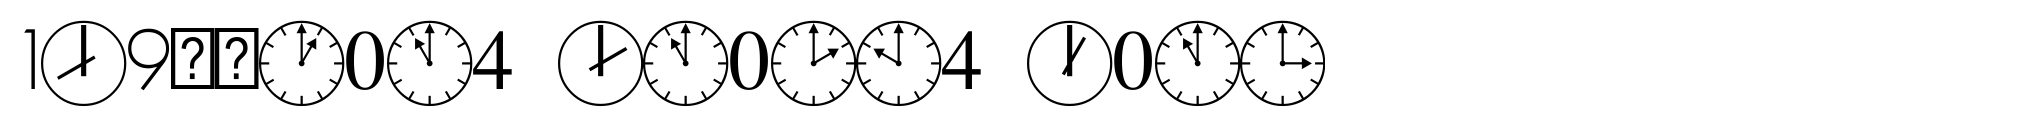 PIXymbols Clocks Bold image